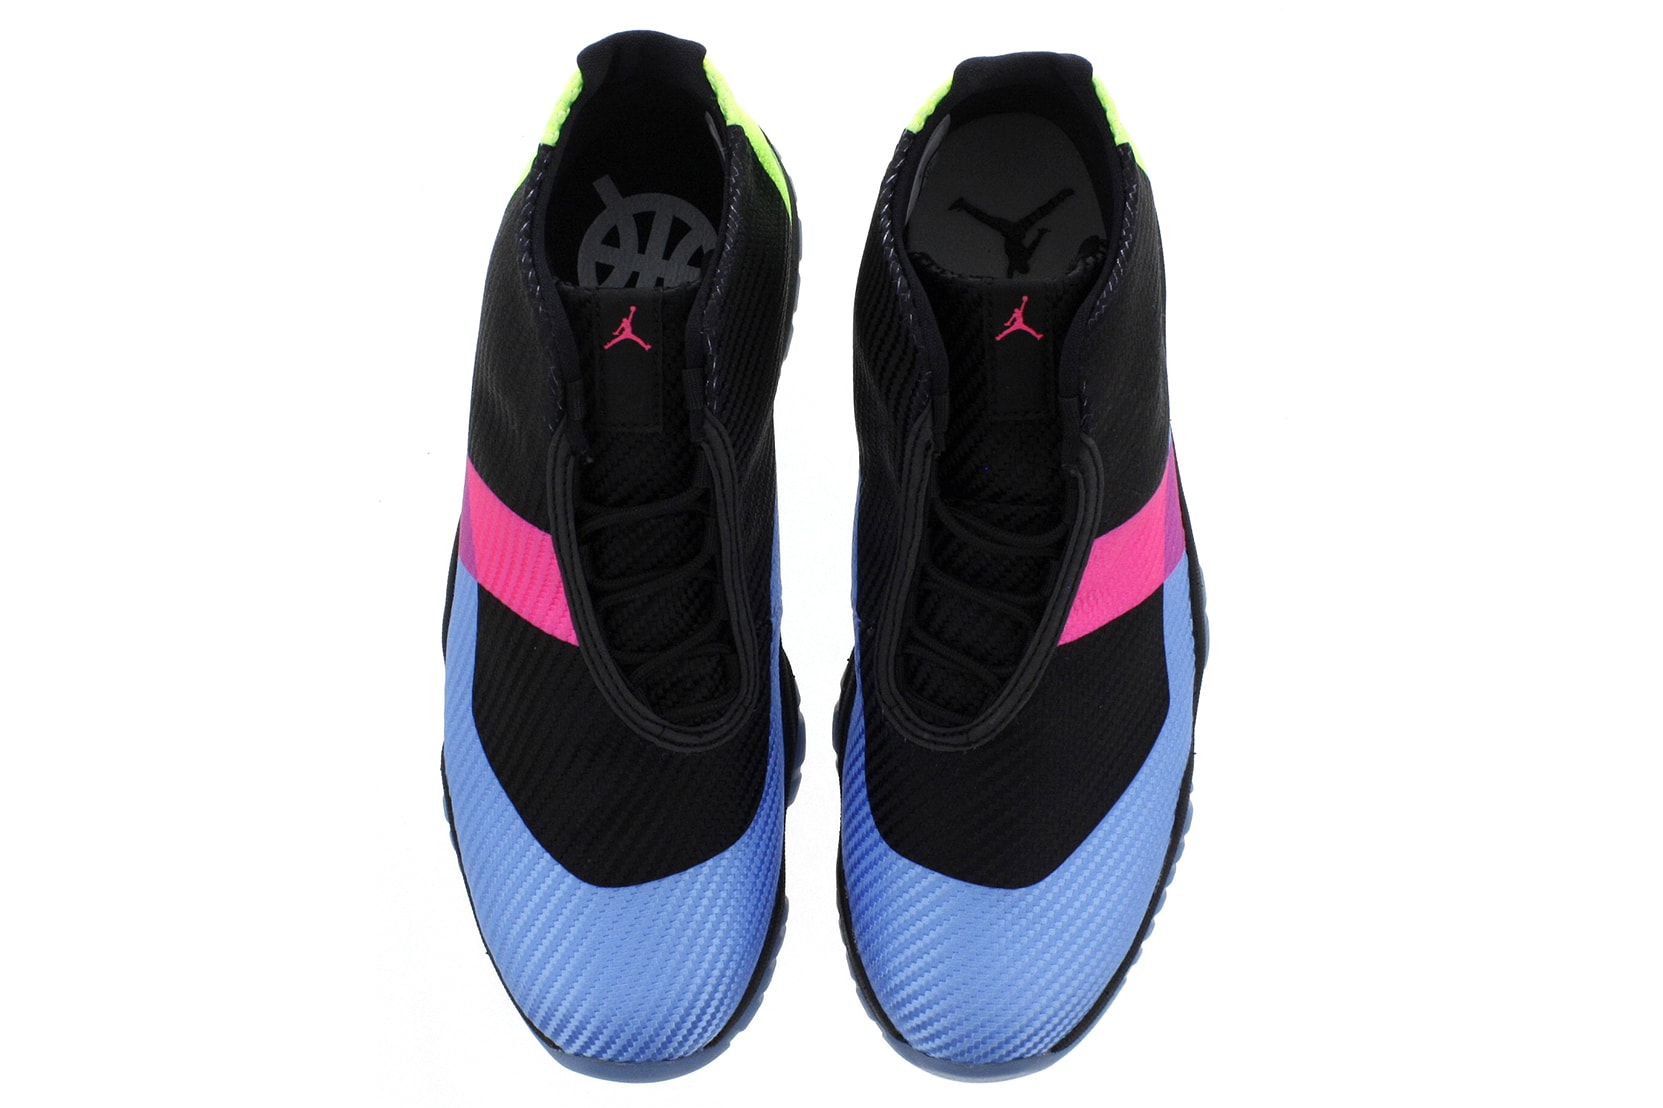 Jordan Future Quai 54 Release Details Shoes Kicks Sneakers Trainers Releasing Available Soon Purchase Cop Buy